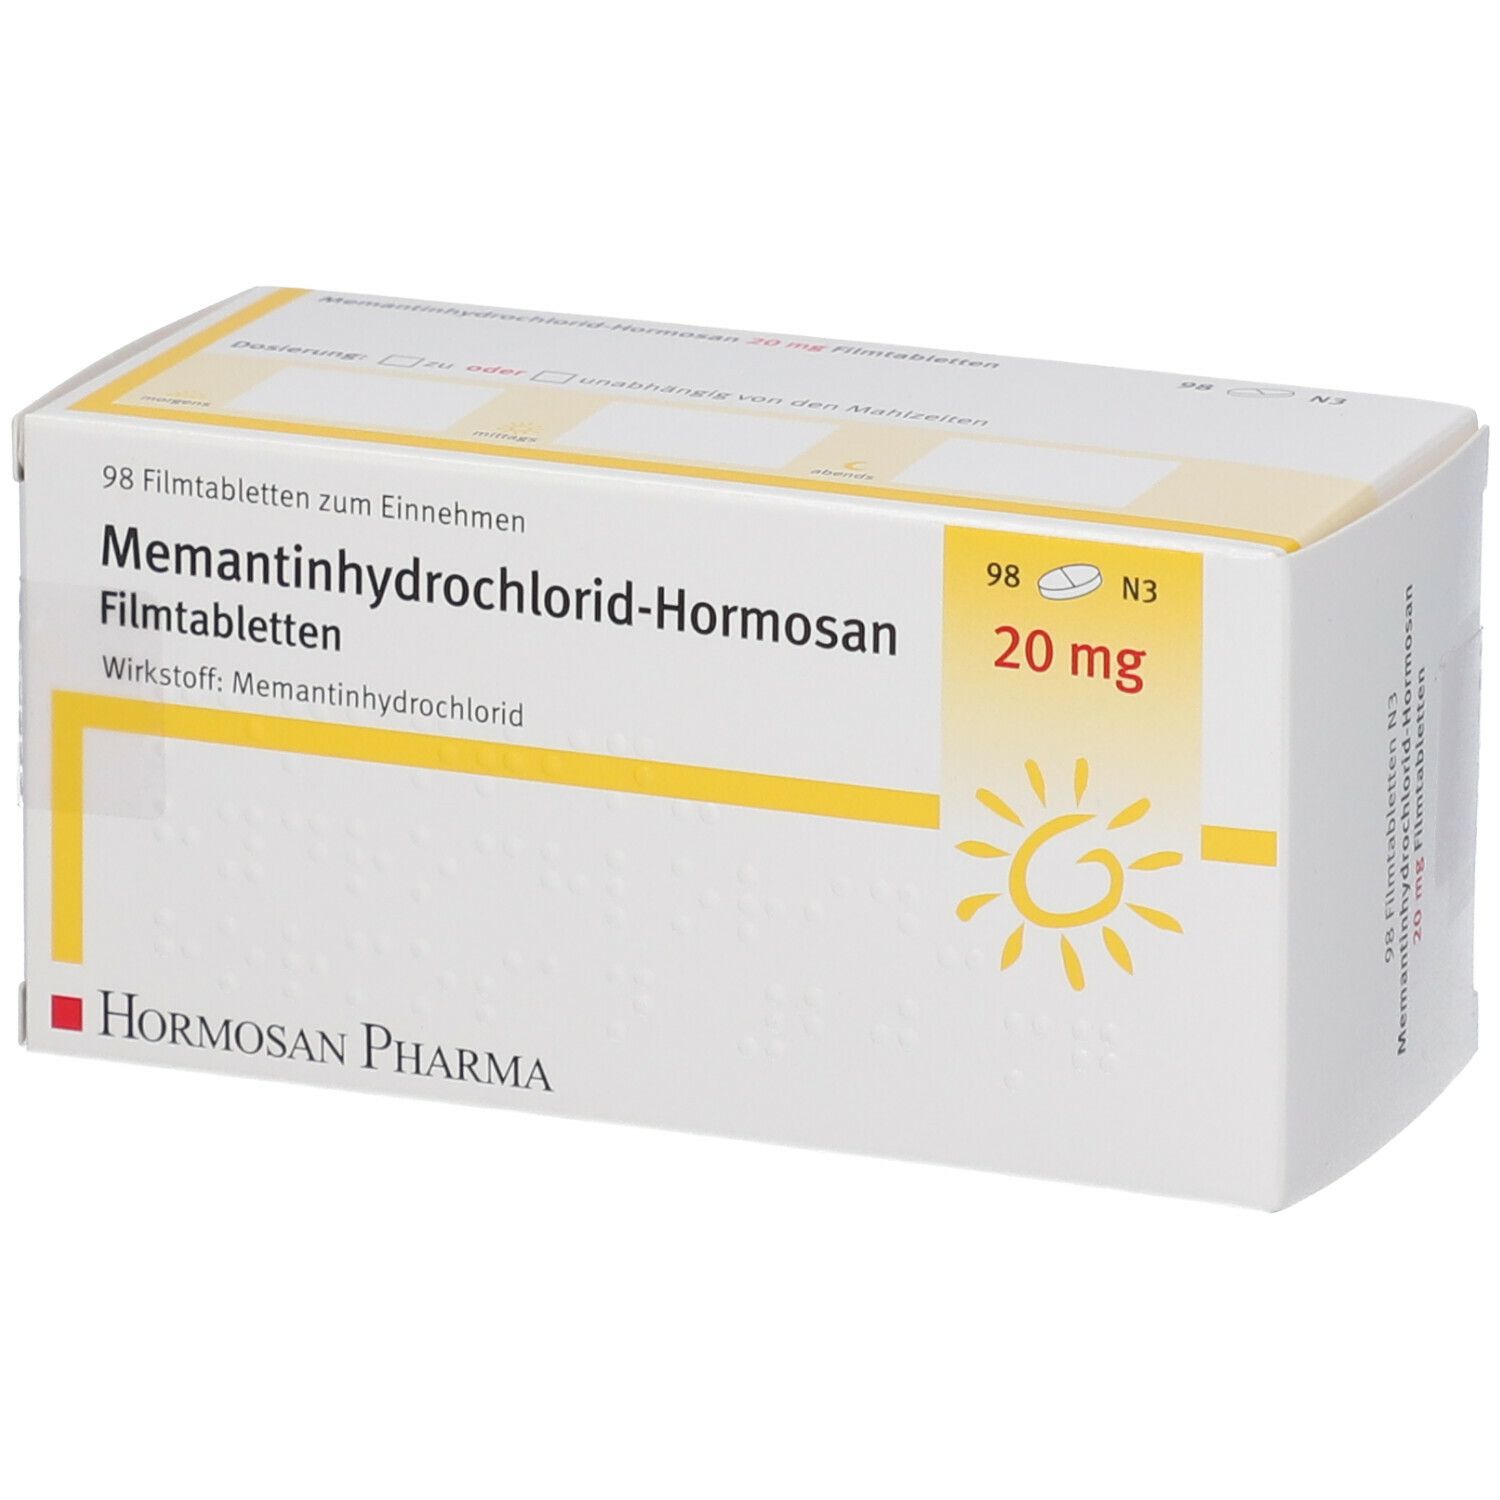 Memantinhydrochlorid-Hormosan 20 mg